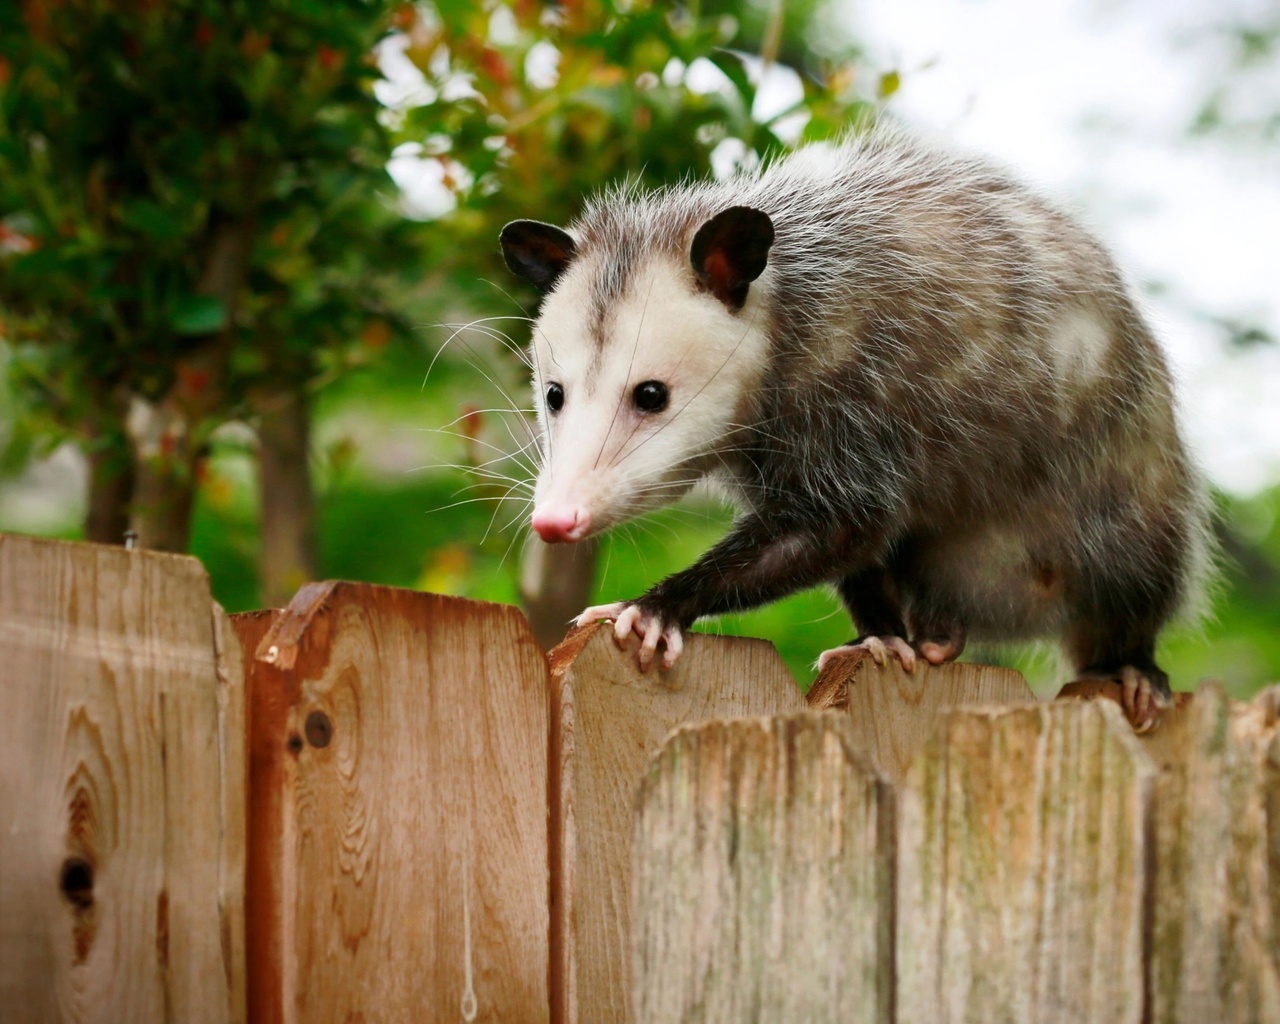 texas, opossum, small marsupial, fence